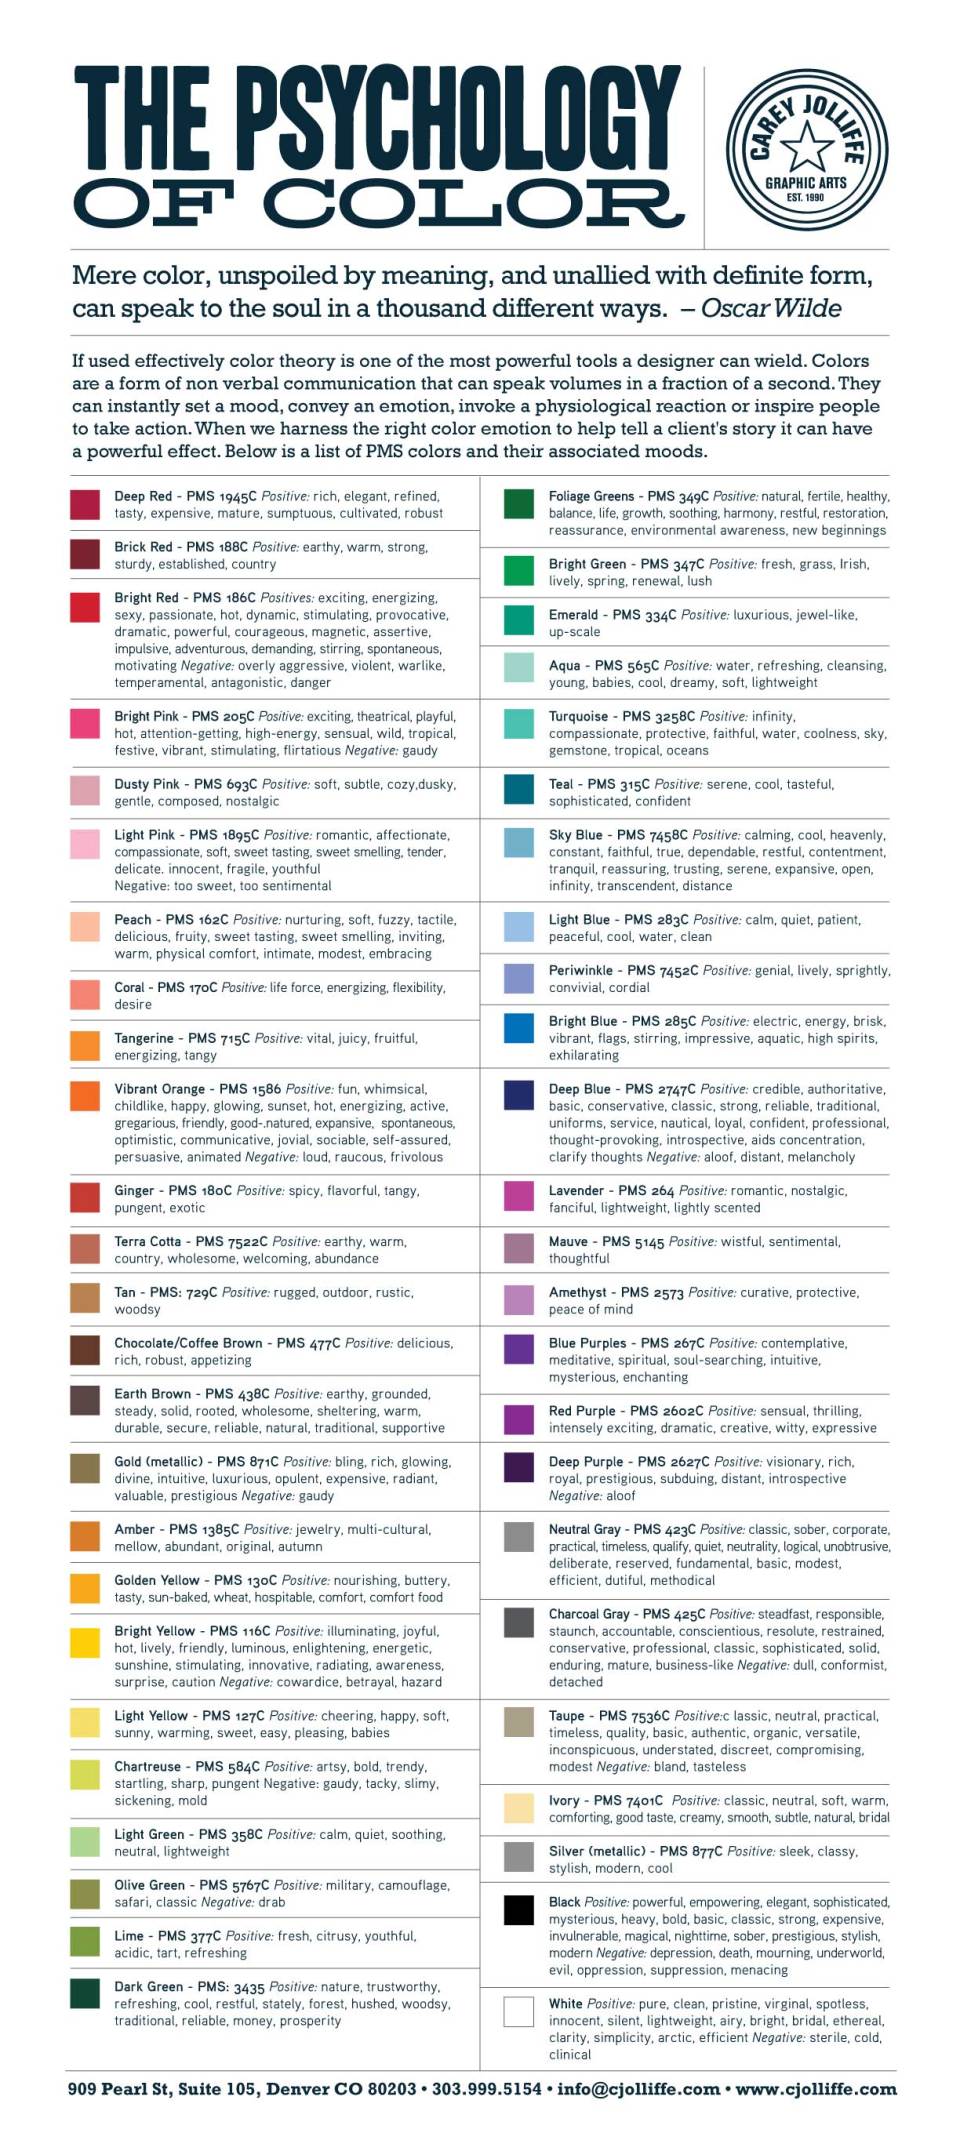 Psychology-of-Colour